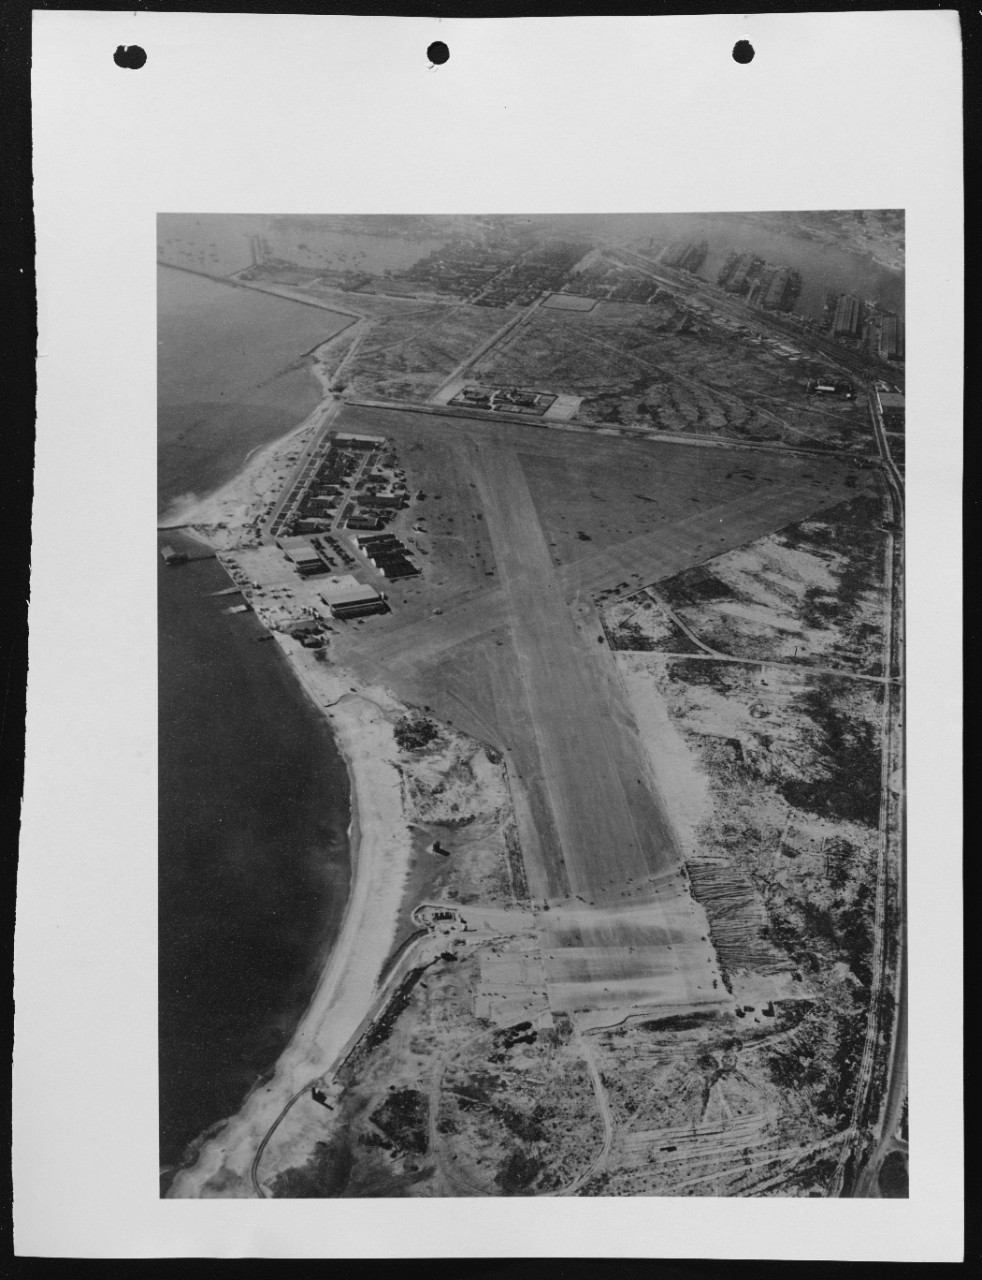 Reeves Field, U.S. Naval Air Station San Diego, California